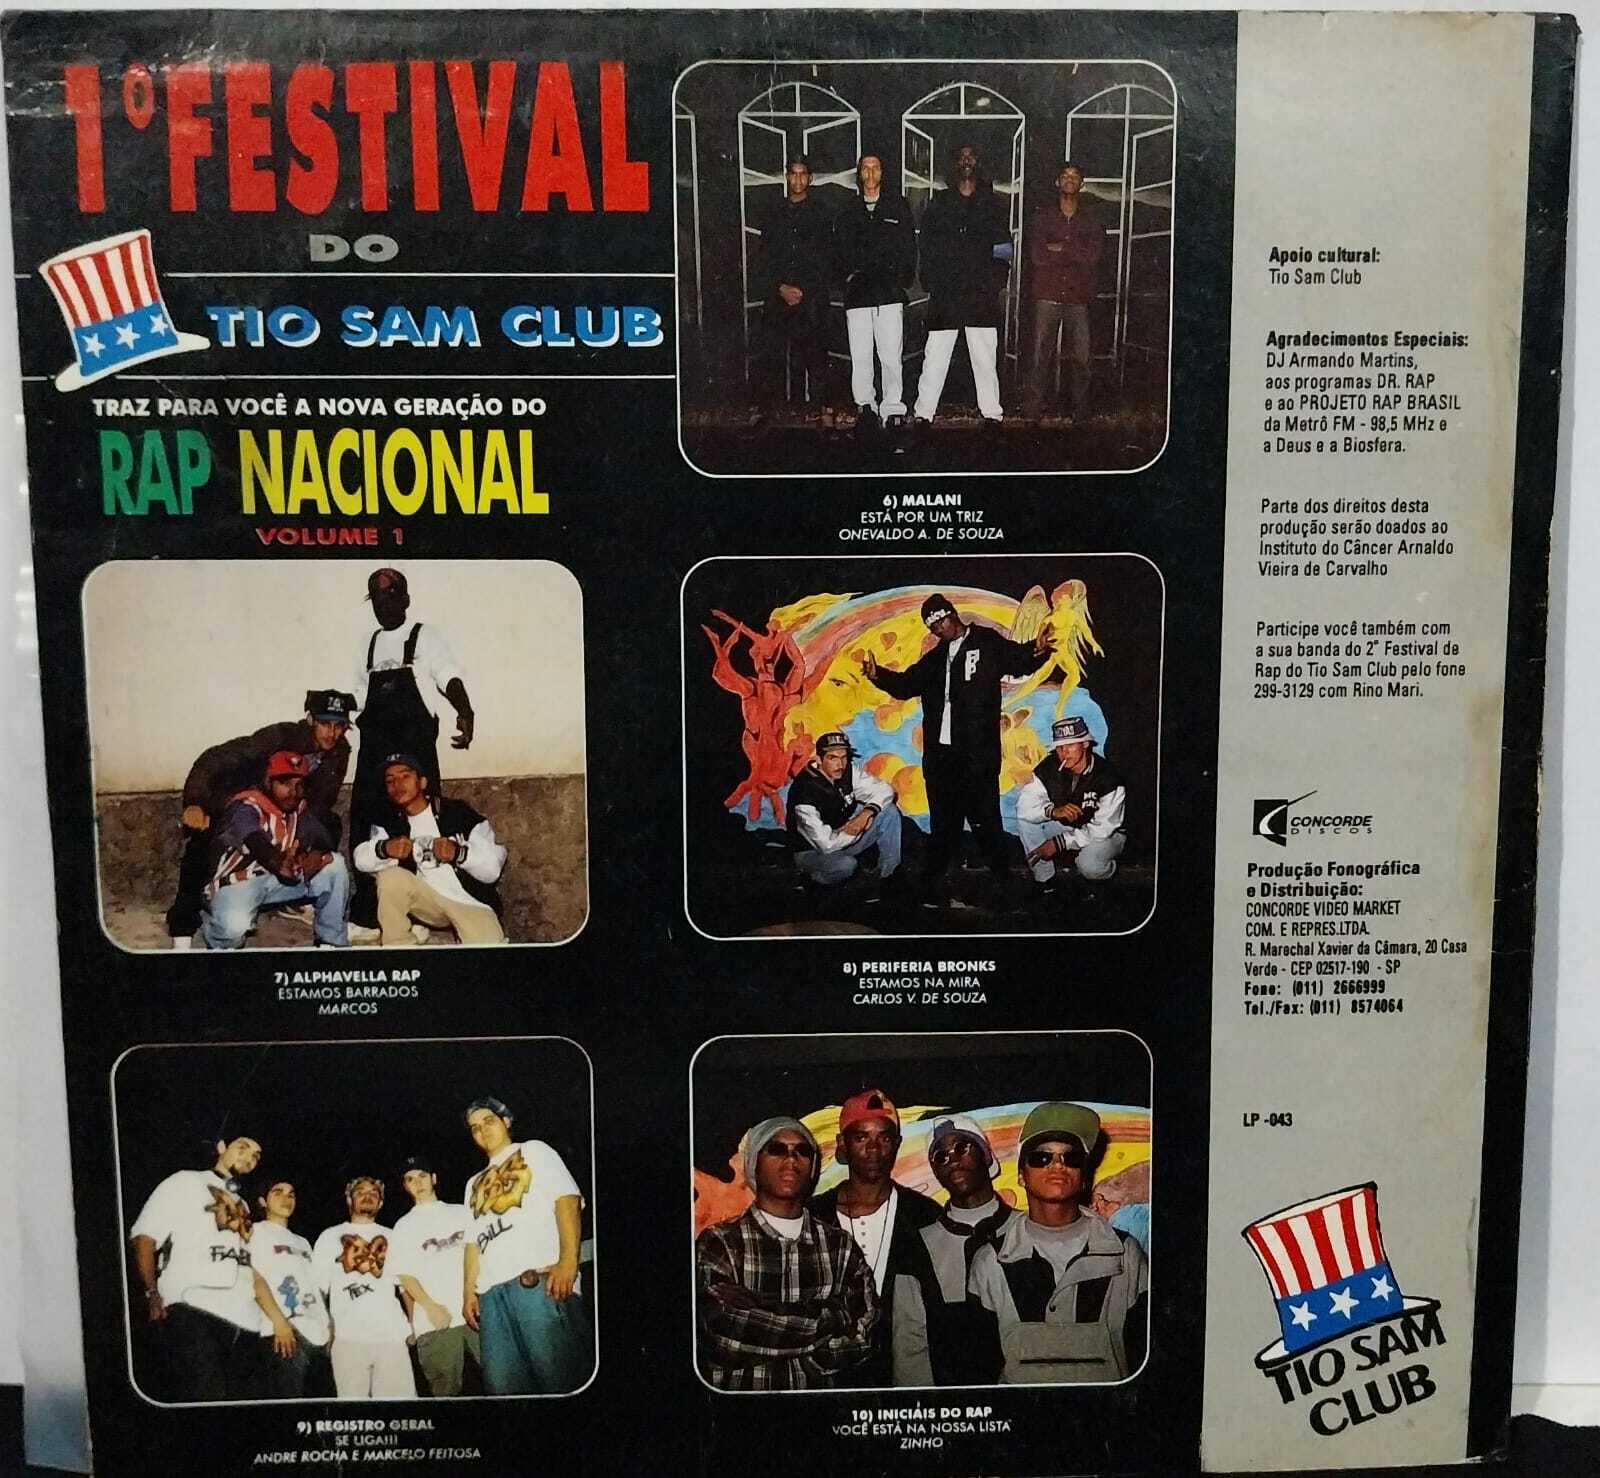 Vinil - Festival Do Tio Sam Club - Rap Nacional Volume 1